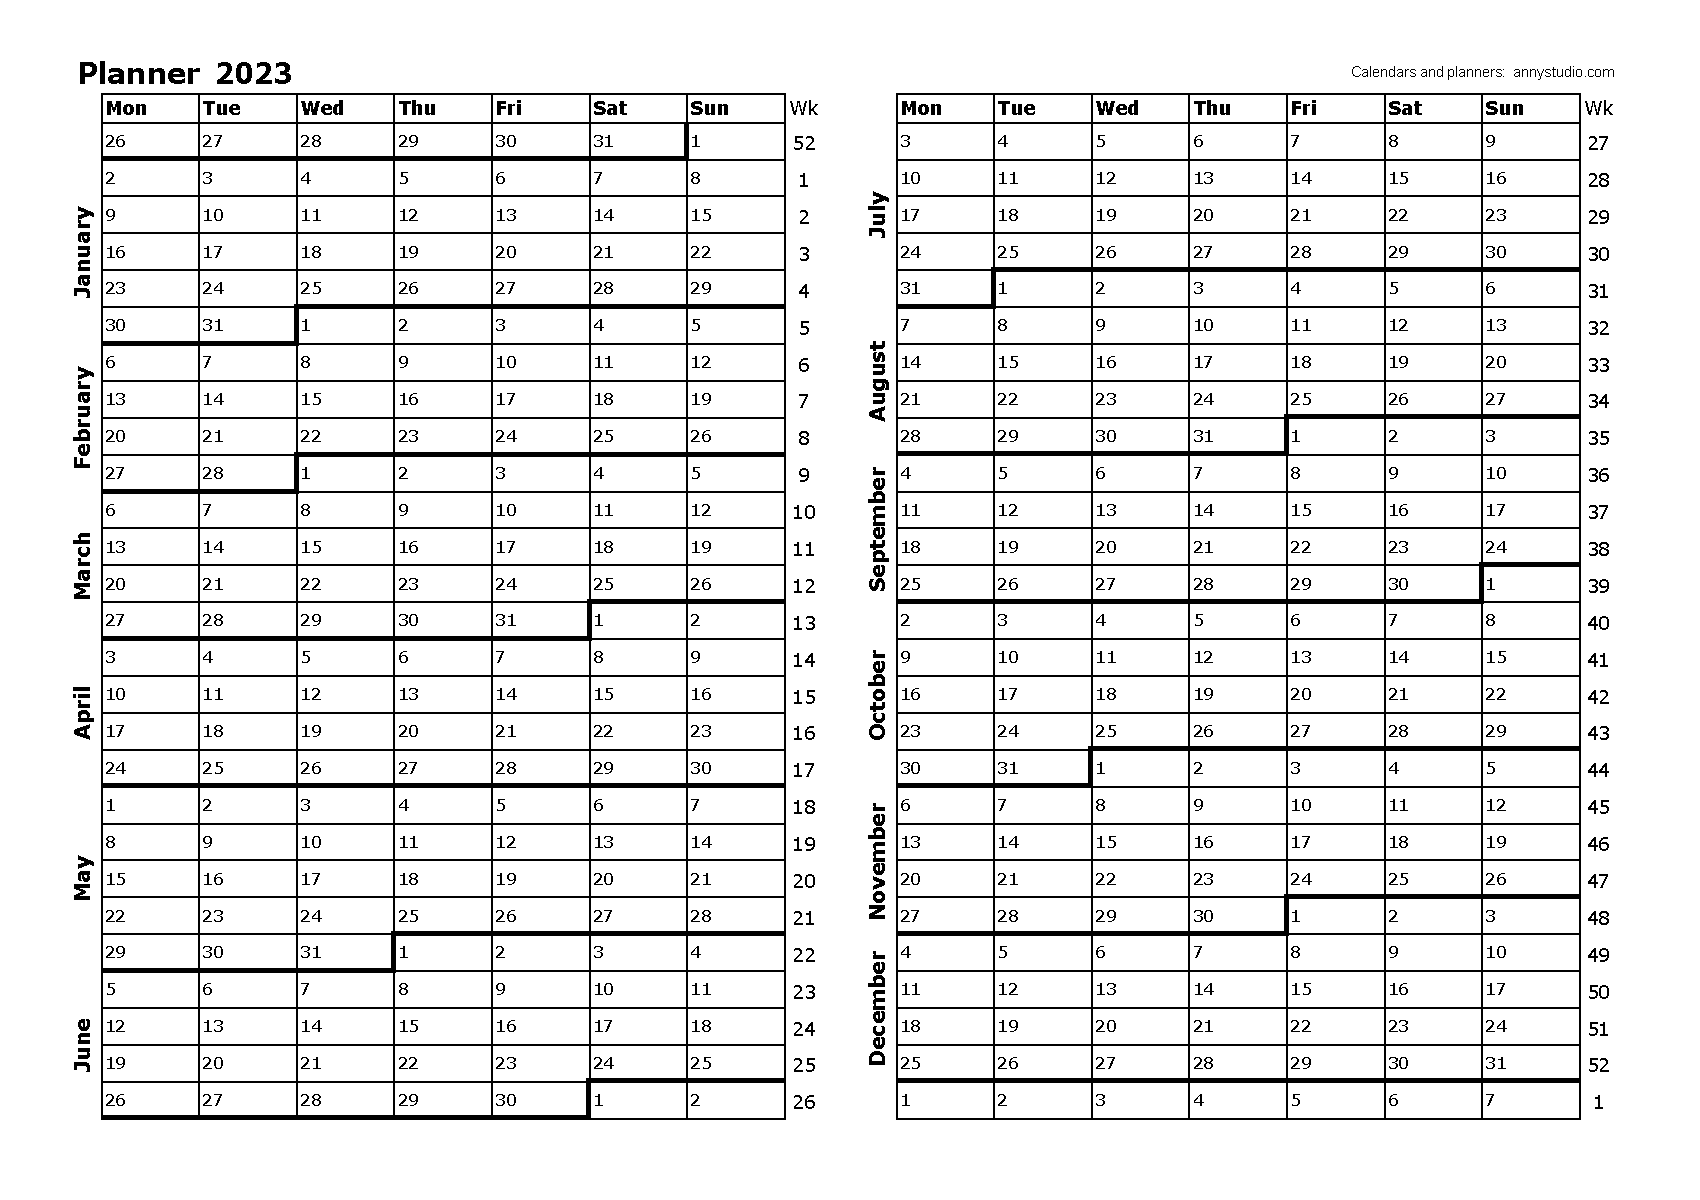 printable-2023-australia-calendar-templates-with-holidays-calendarlabs